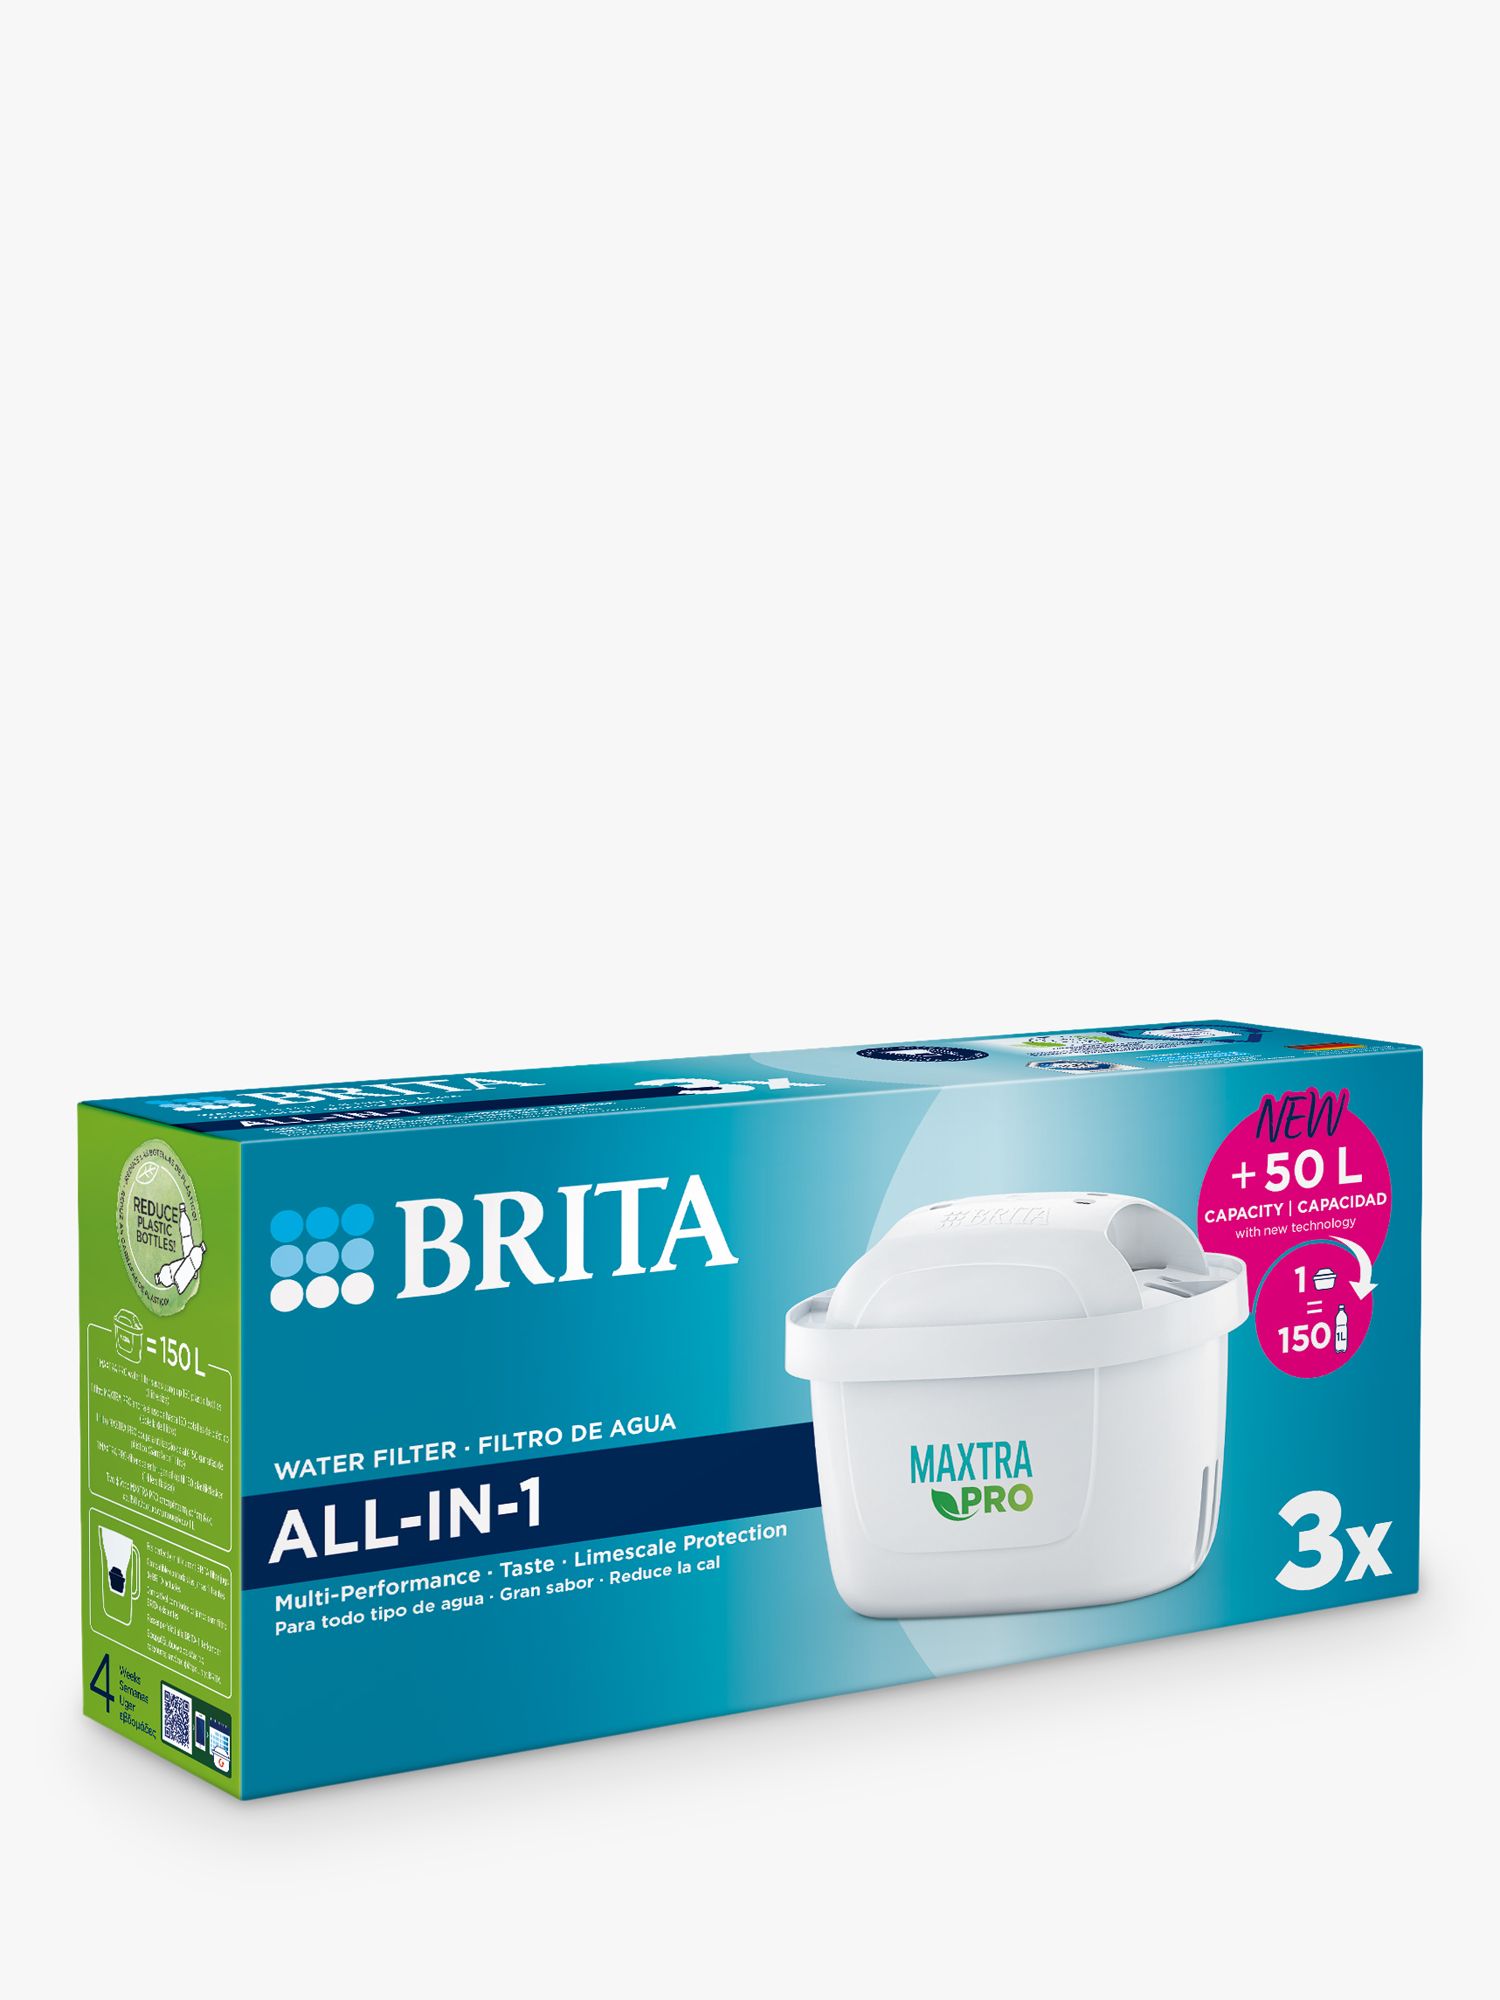 BRITA MAXTRA PRO Limescale Expert Water Filter Cartridge 3pk